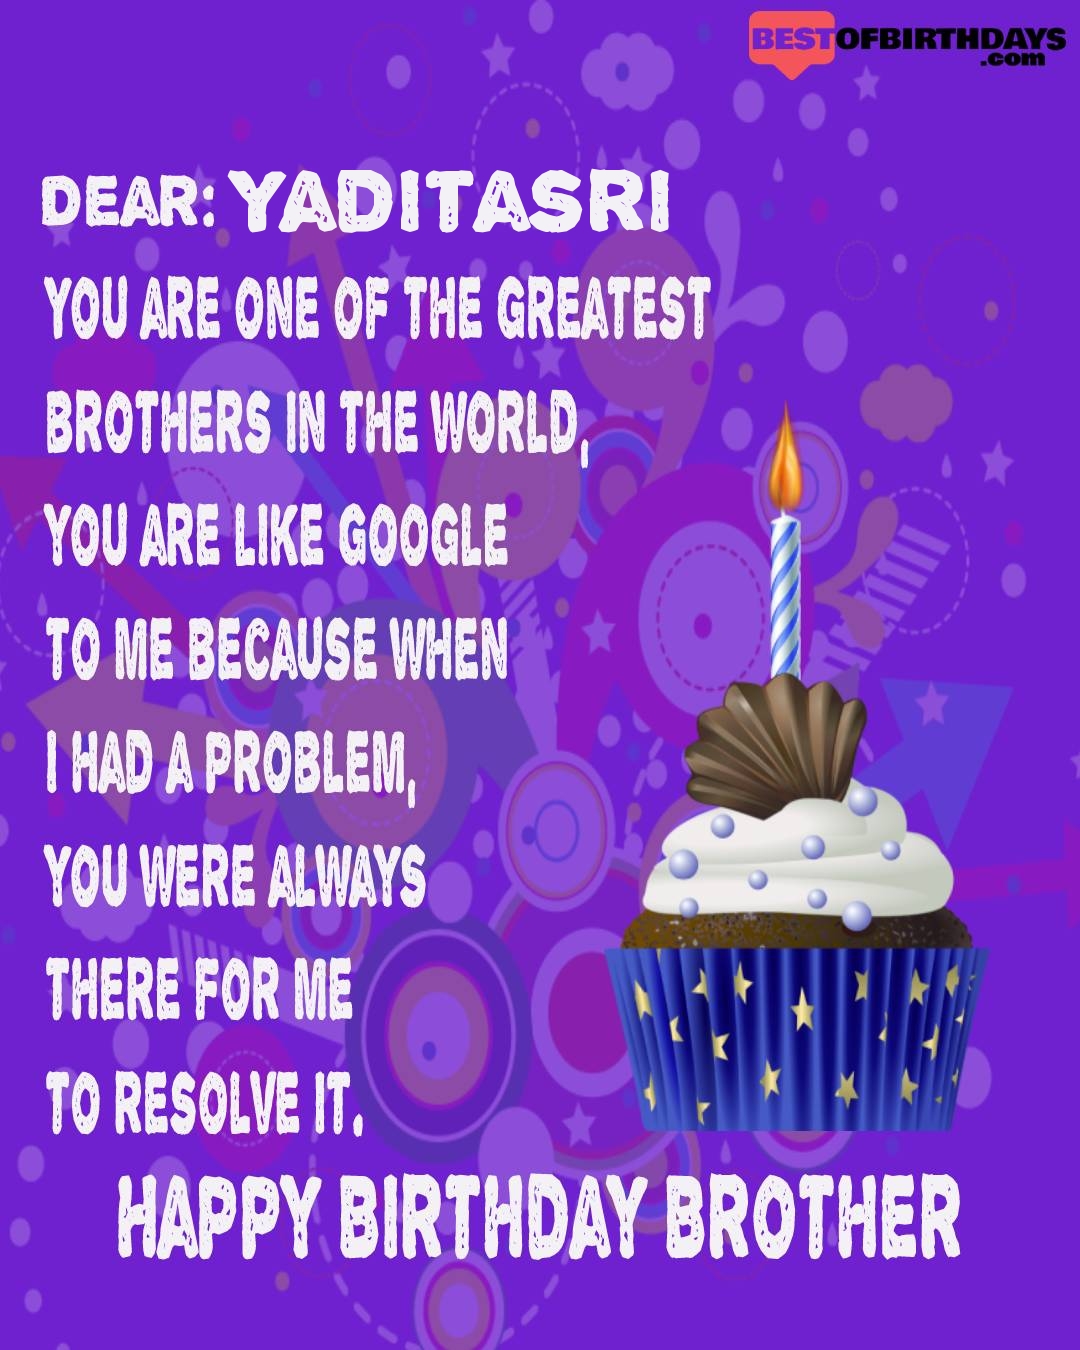 Happy birthday yaditasri bhai brother bro